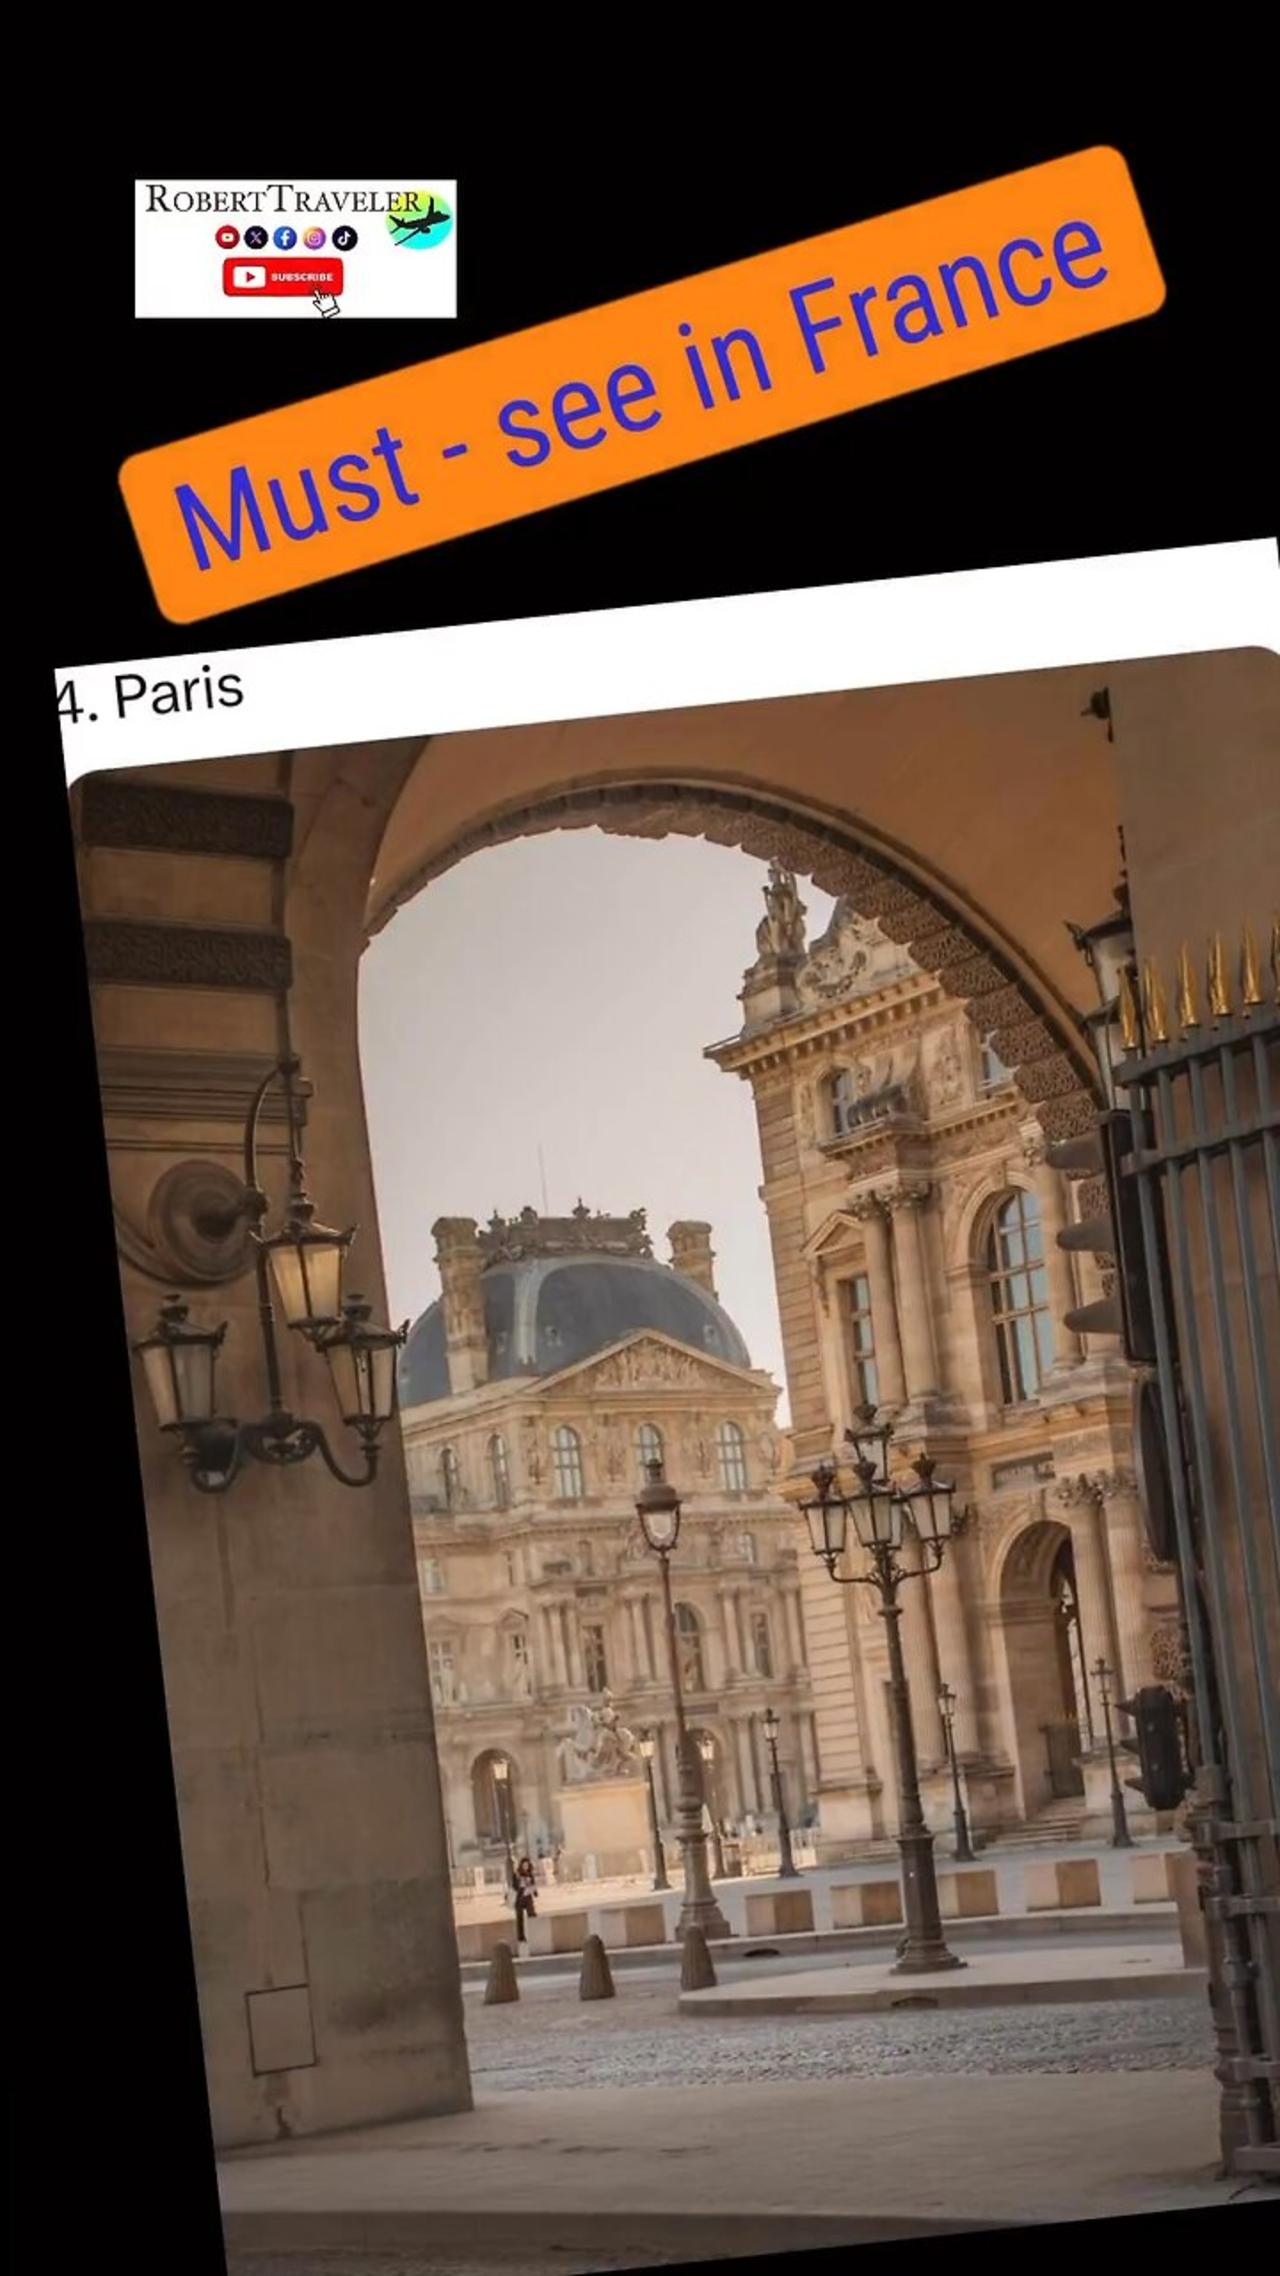 Must - see in France #france #paris #travel #robert - newsR VIDEO